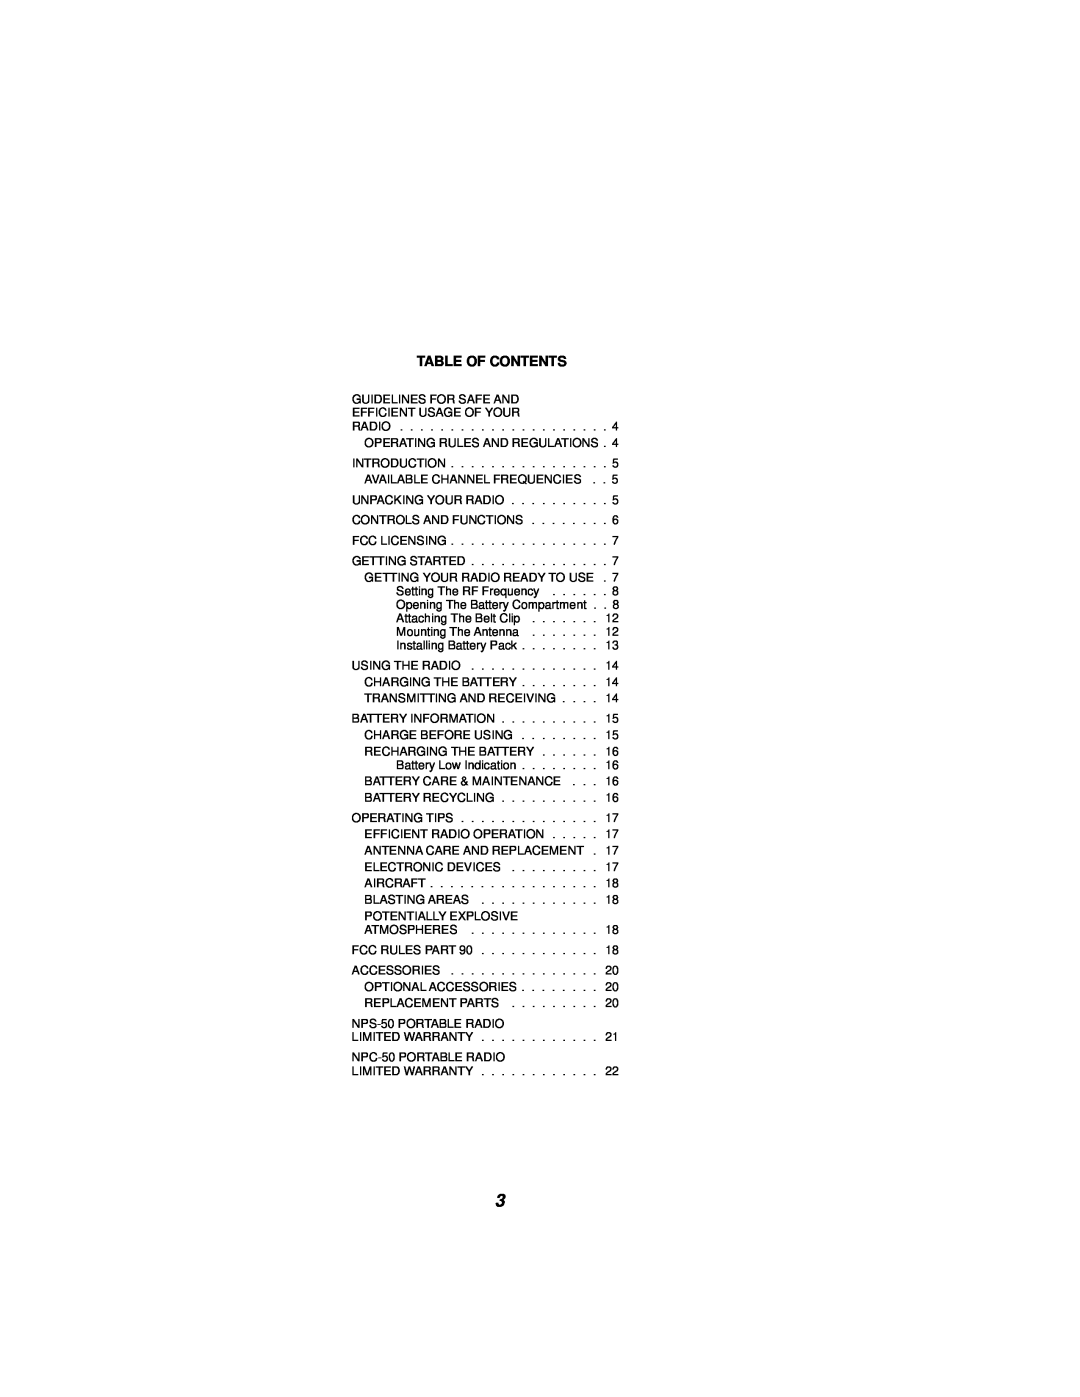 Ericsson NPC-50 manual Table Of Contents 